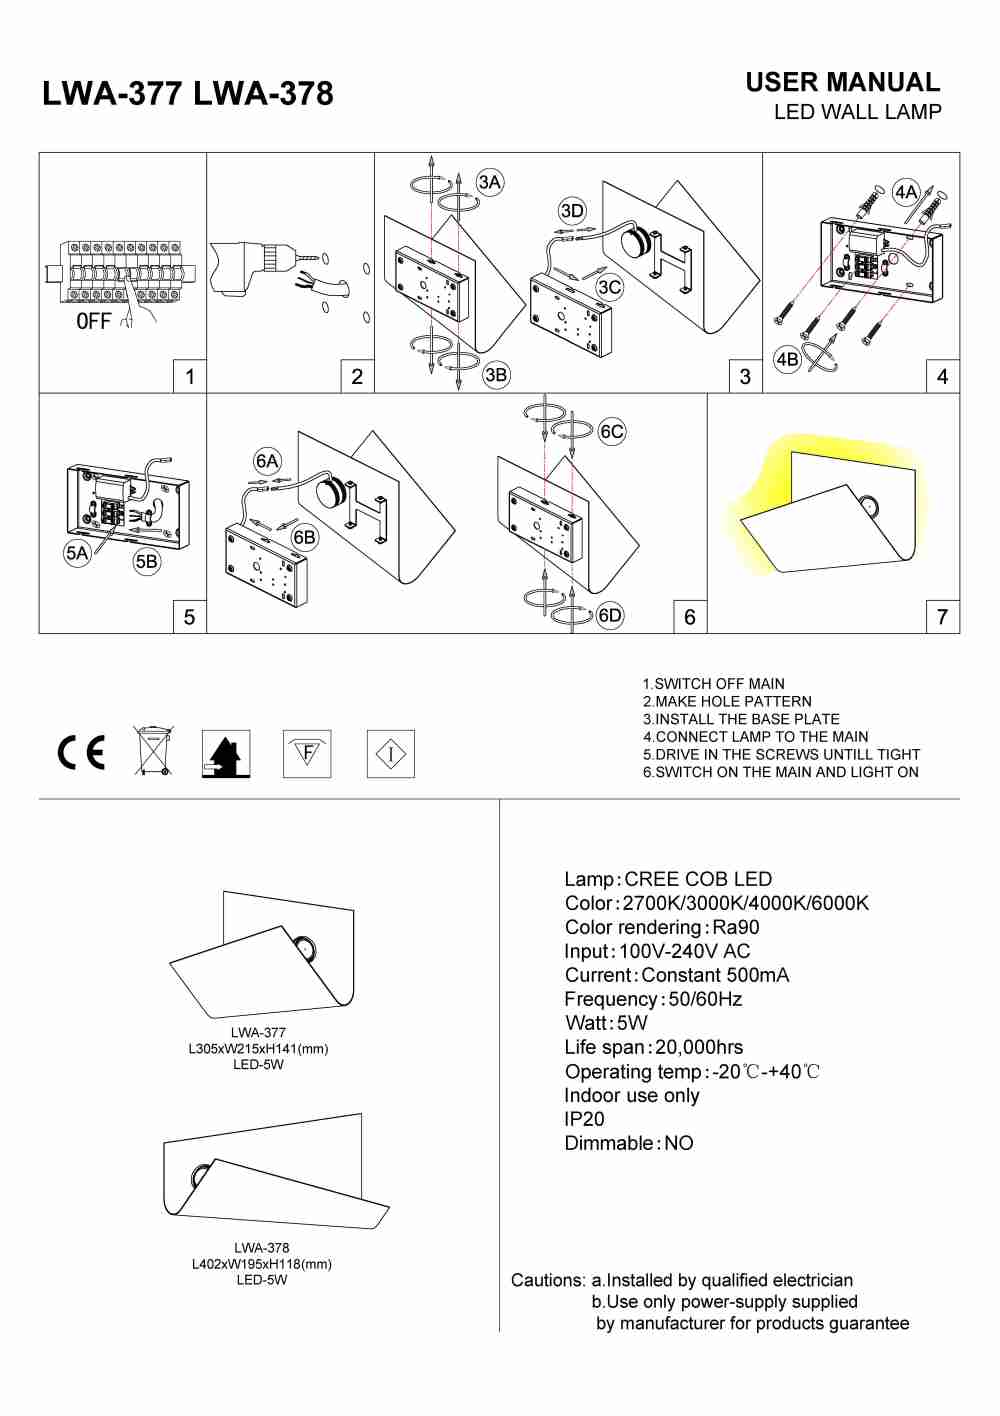 LWA-377 LWA-378 interior LED wall light installation guide